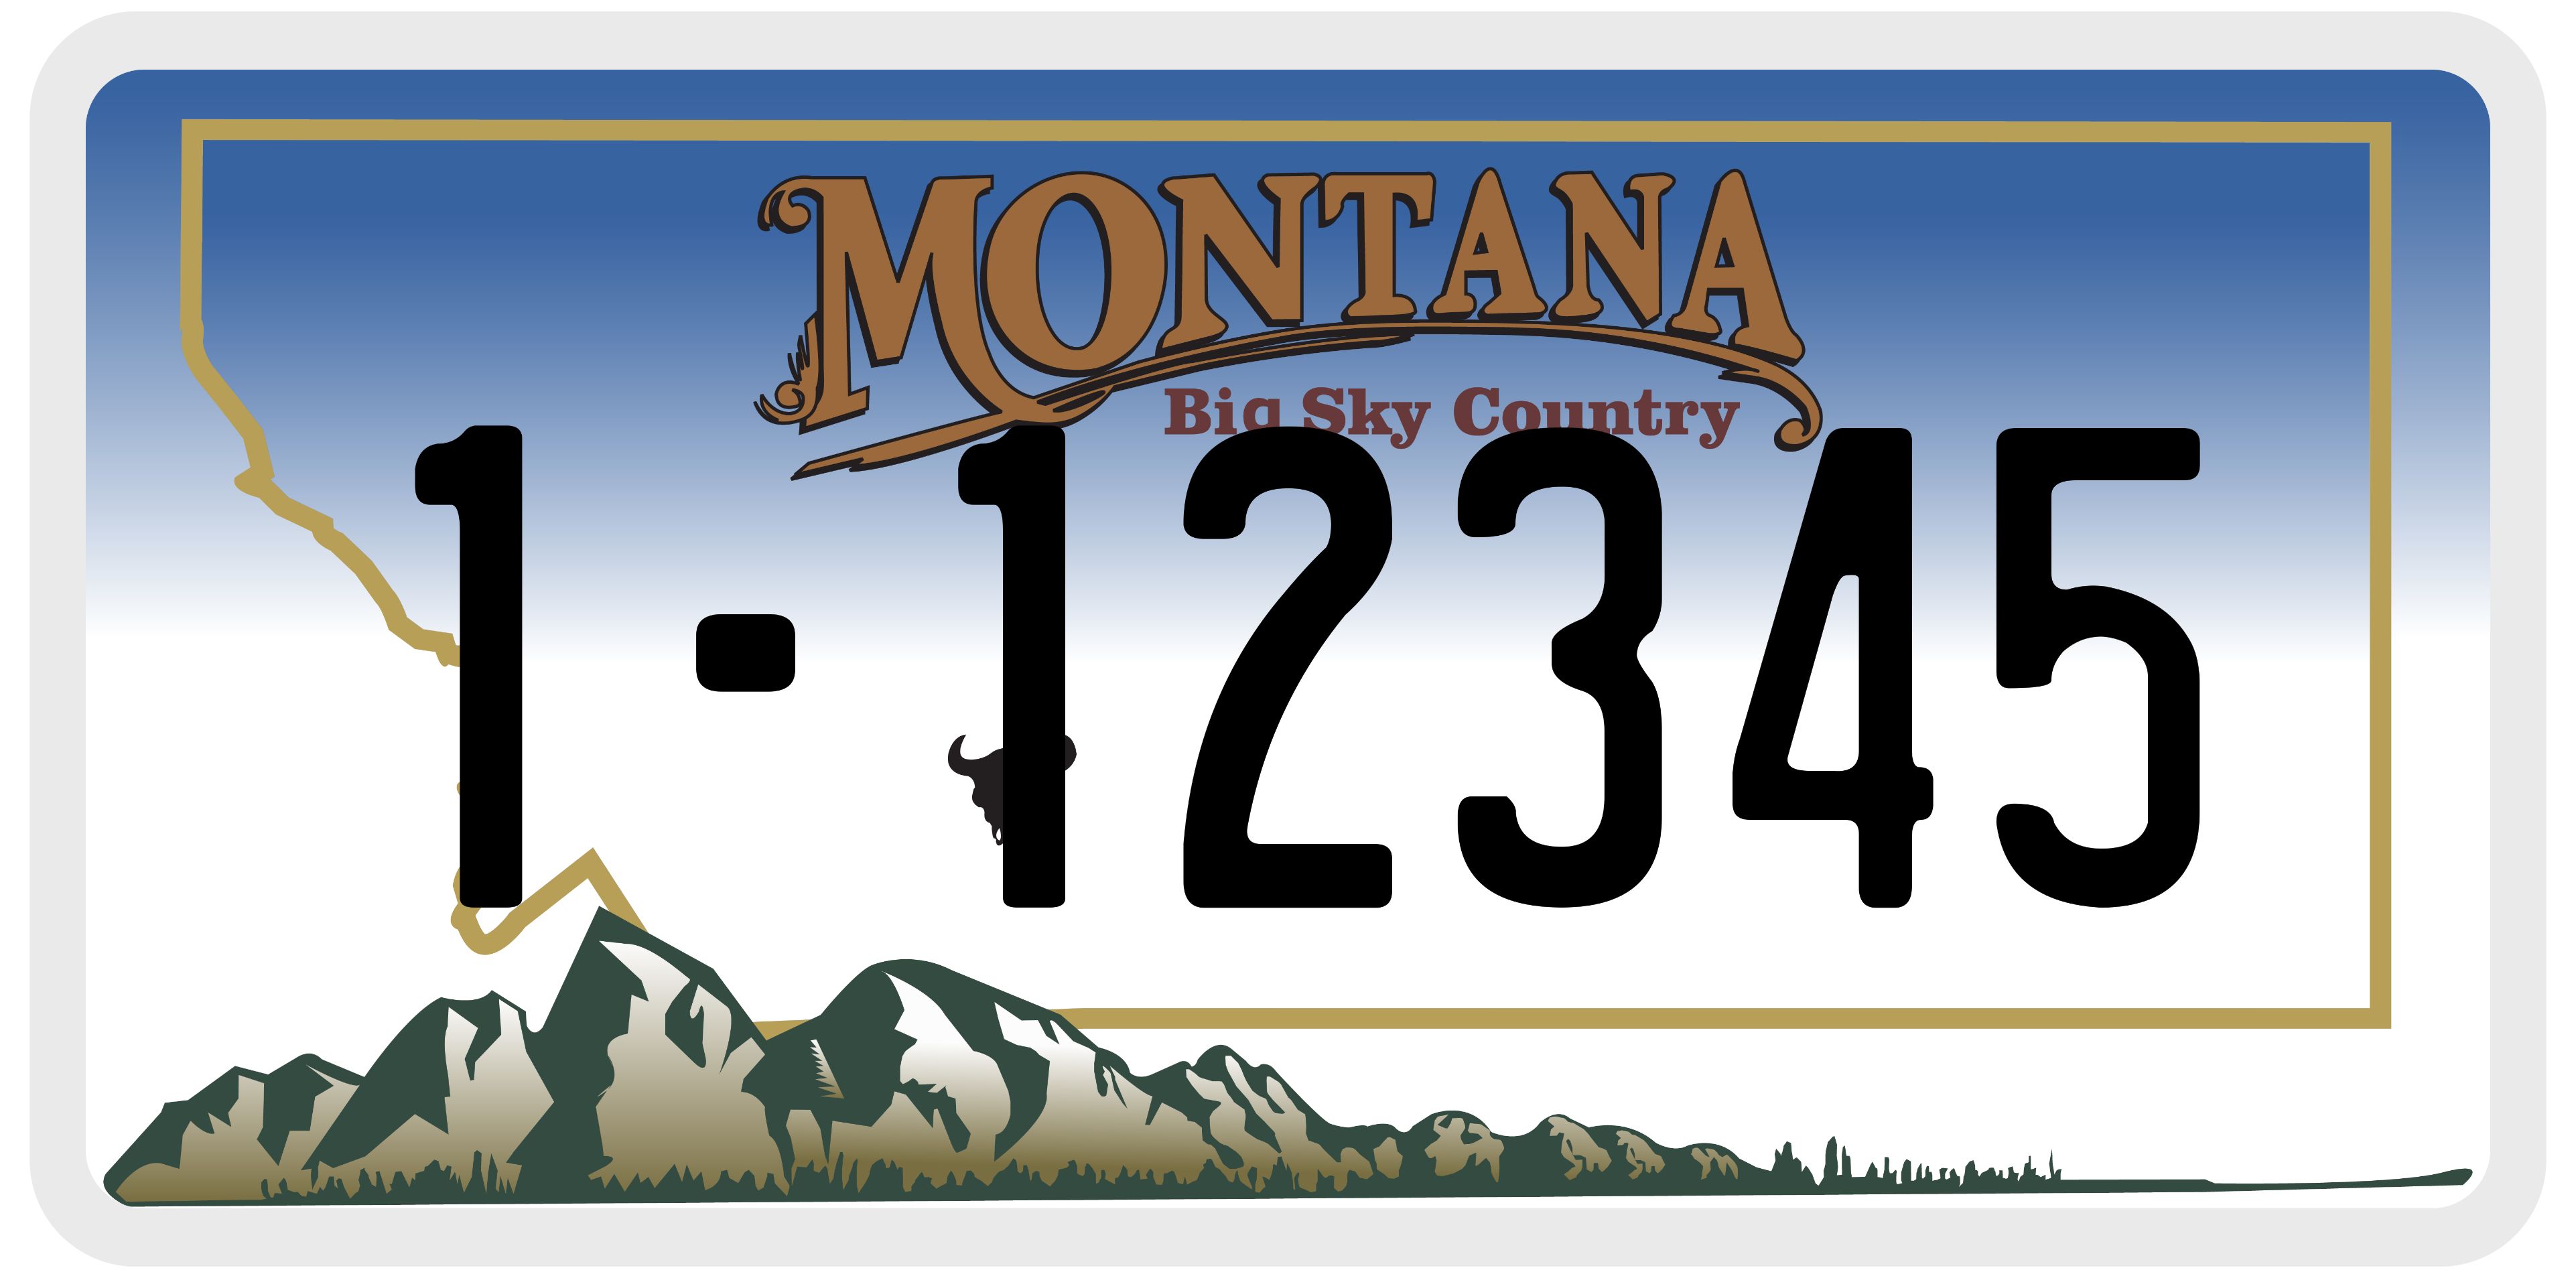 Montana License Plate Sample